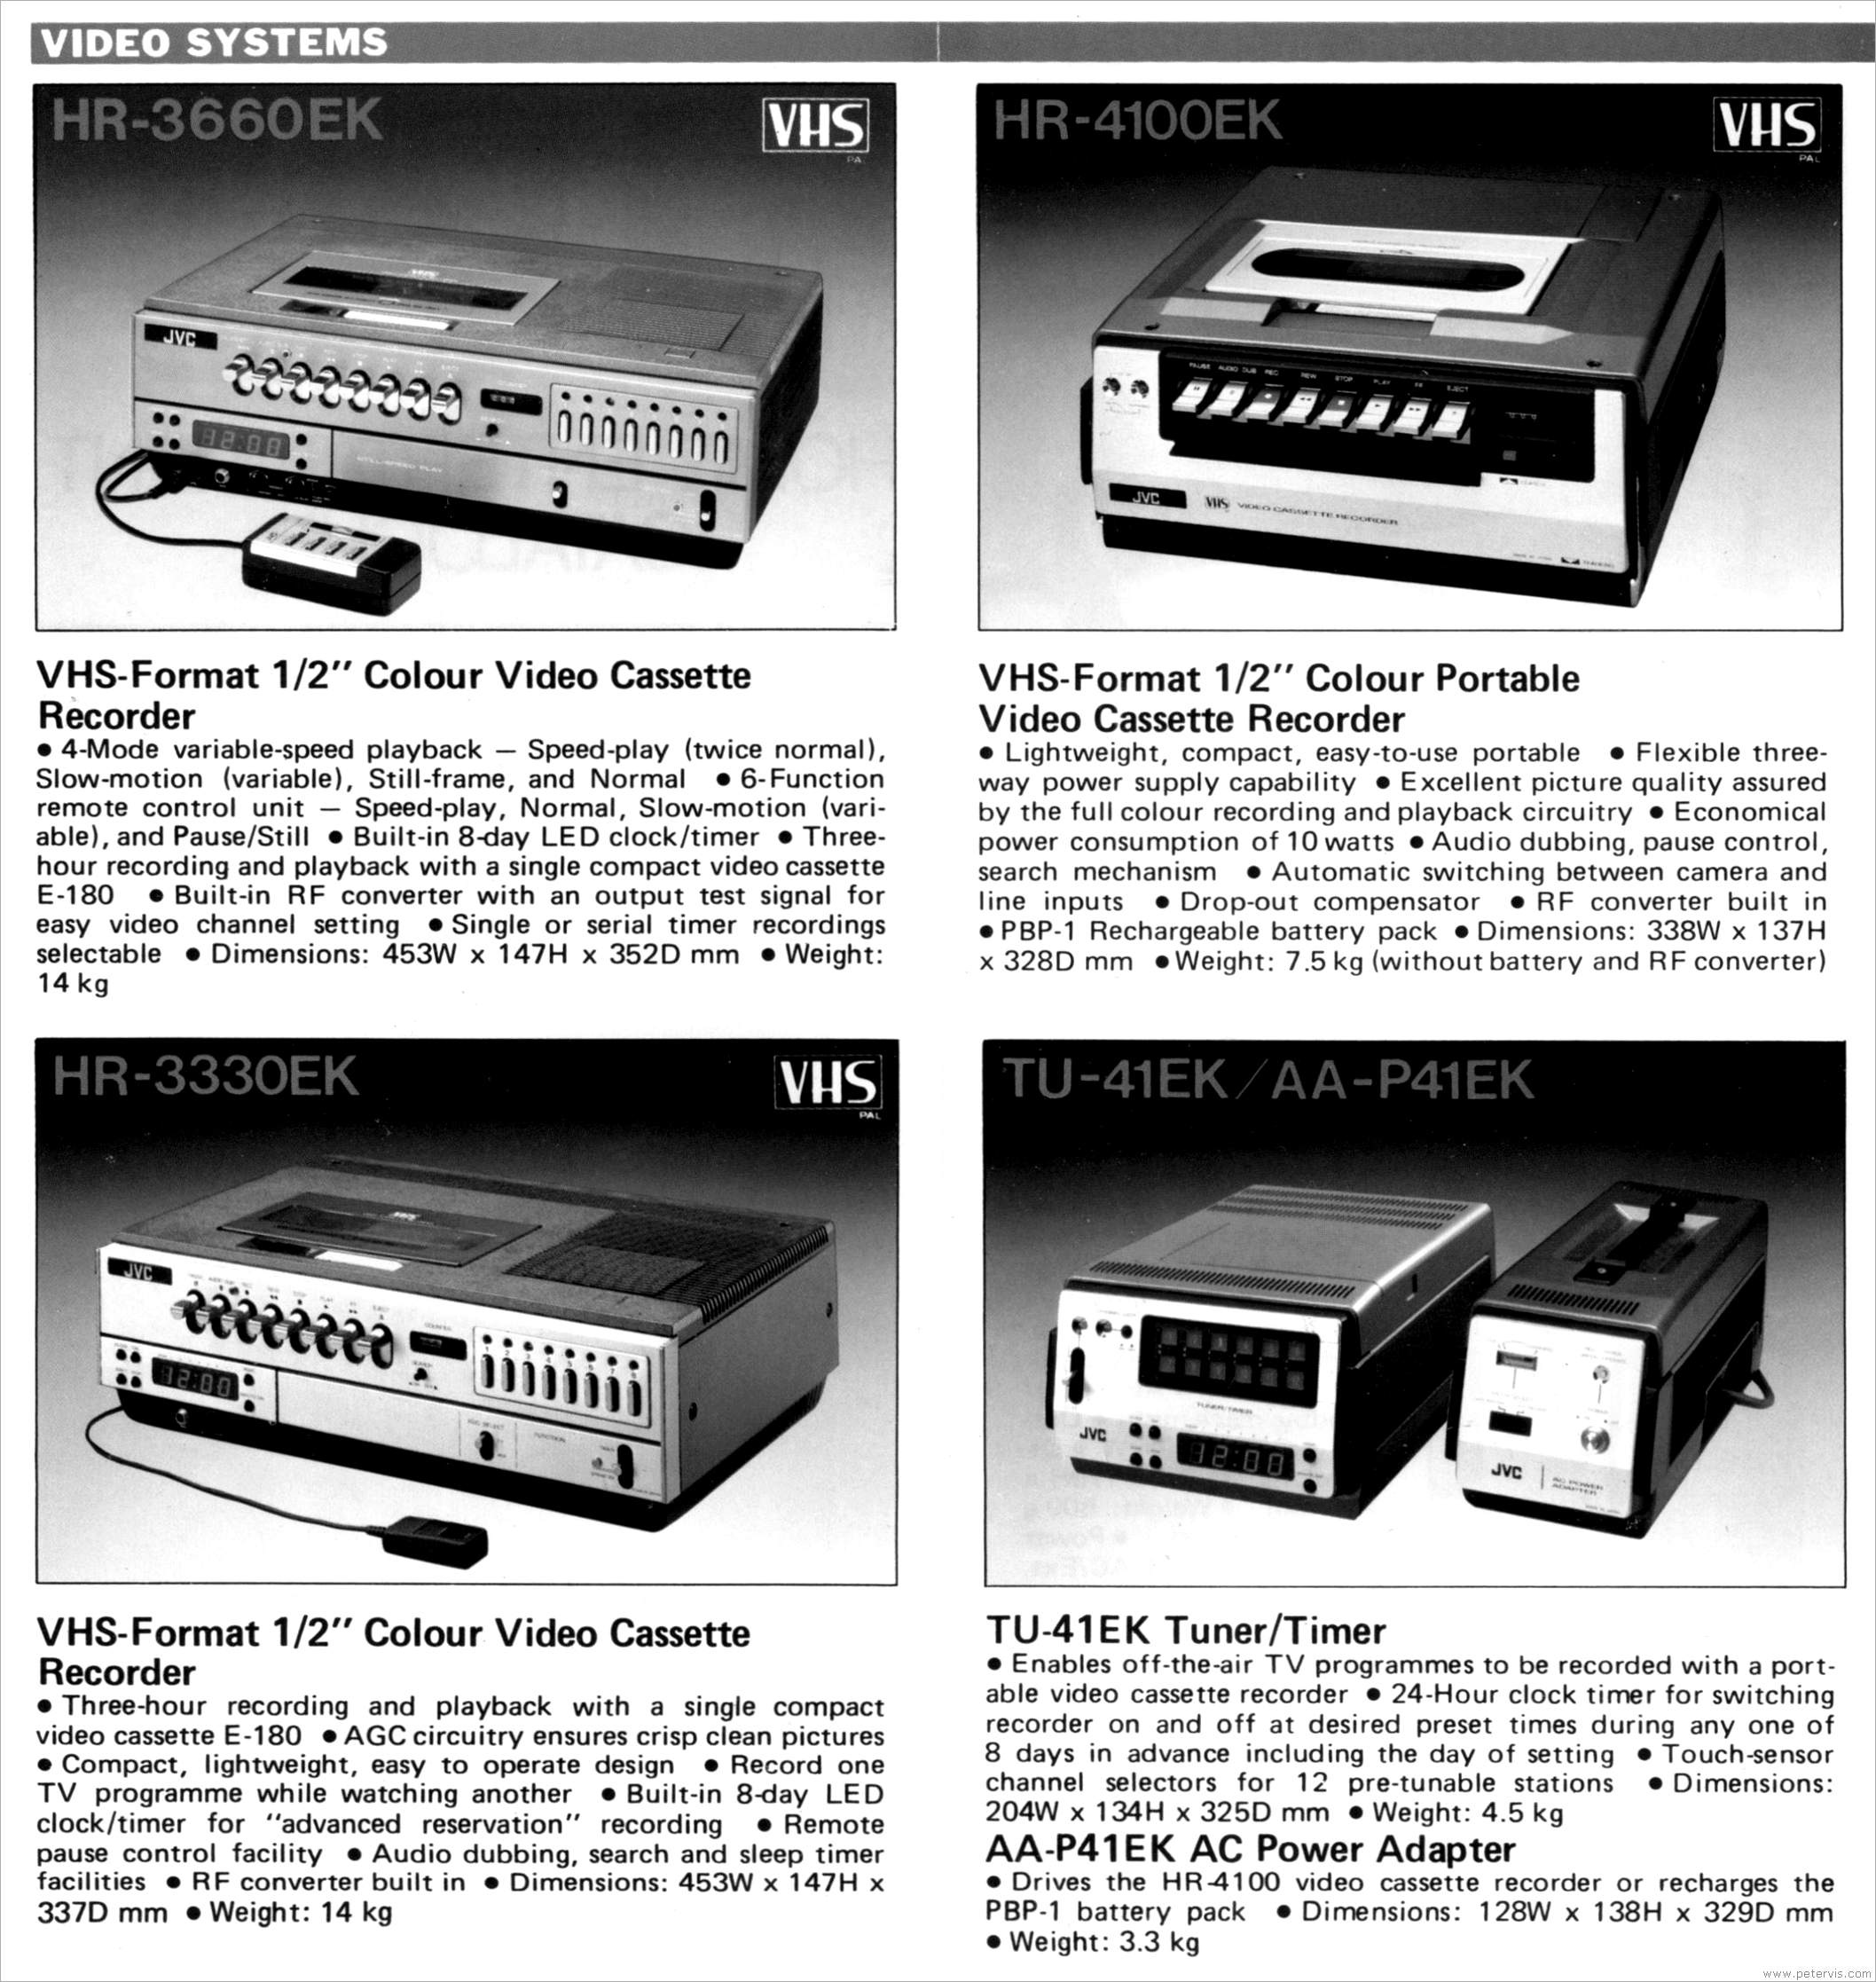 Video Cassette Recorders